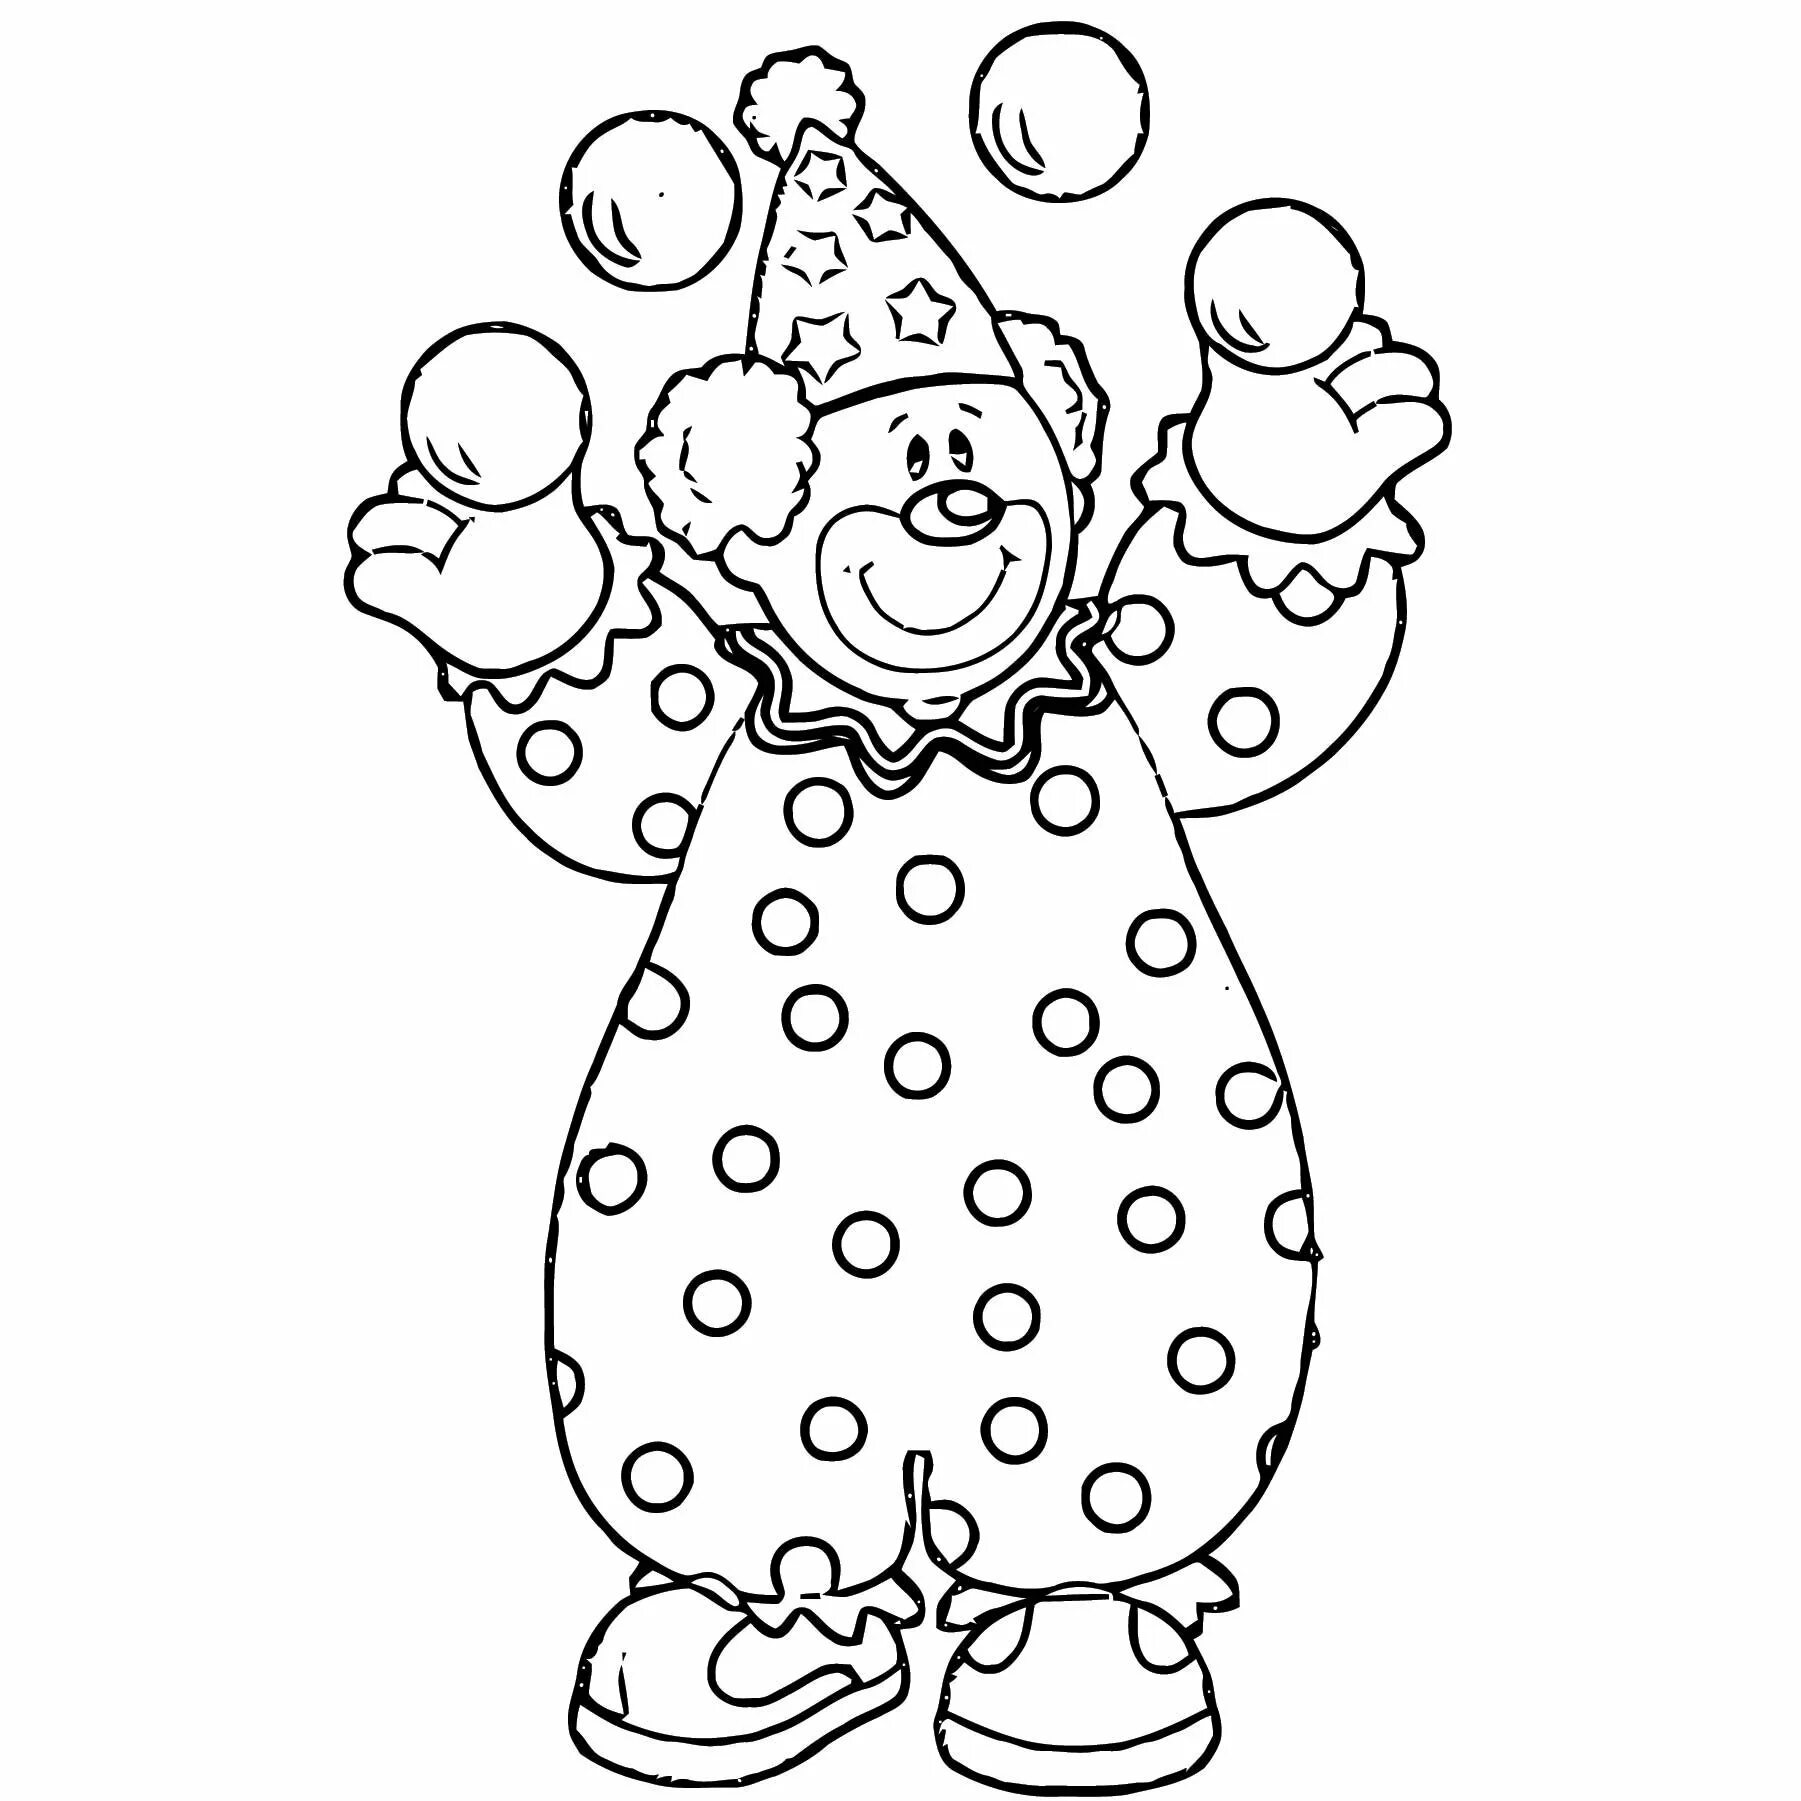 Клоуны раскраска для детей 5 лет. Клоун раскраска. Клоун раскраска для детей. Клоун петрушка раскраска. Грустный клоун раскраска.